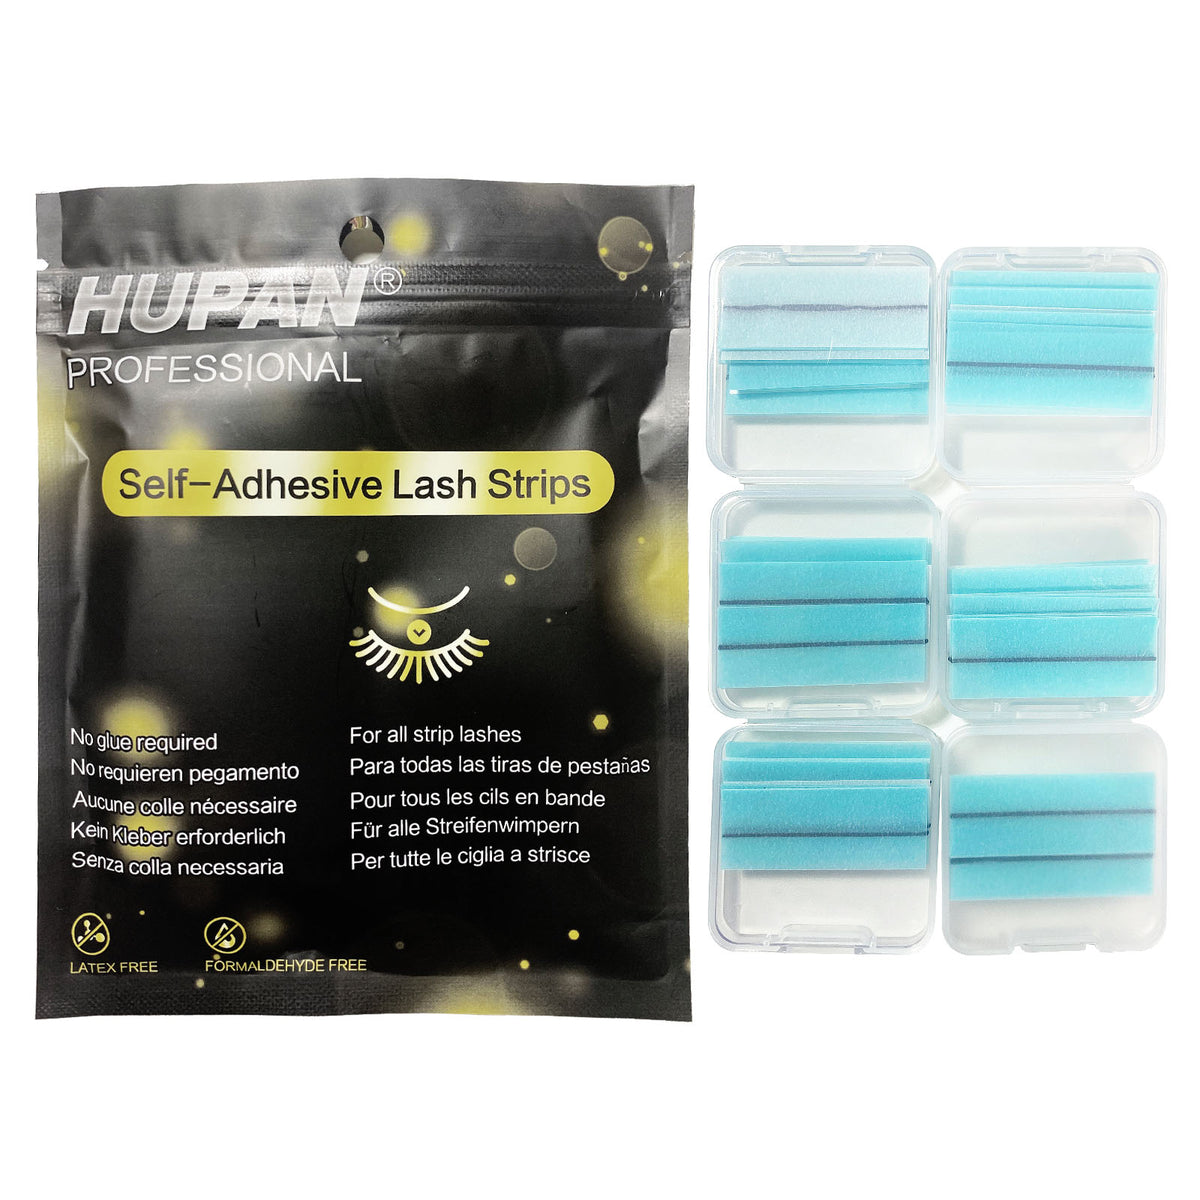 Self Adhesive Lash Strips for False Eyelashes 30 pairs, Lash Glue Replacement